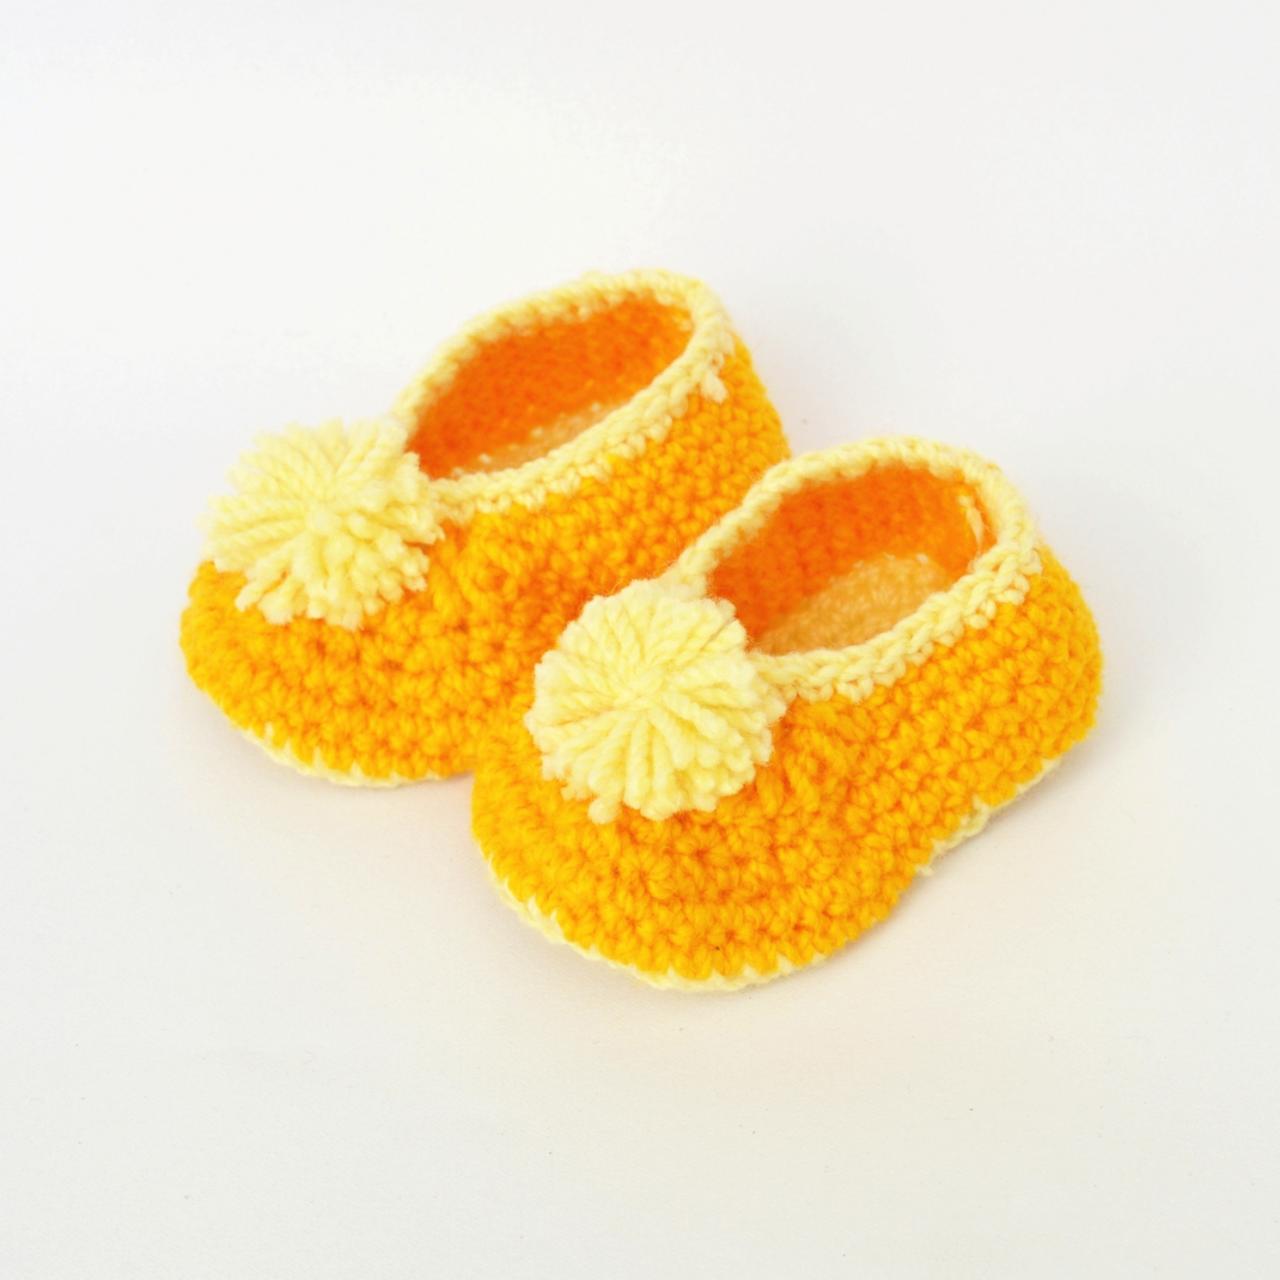 Crochet Baby Booties - Yellow